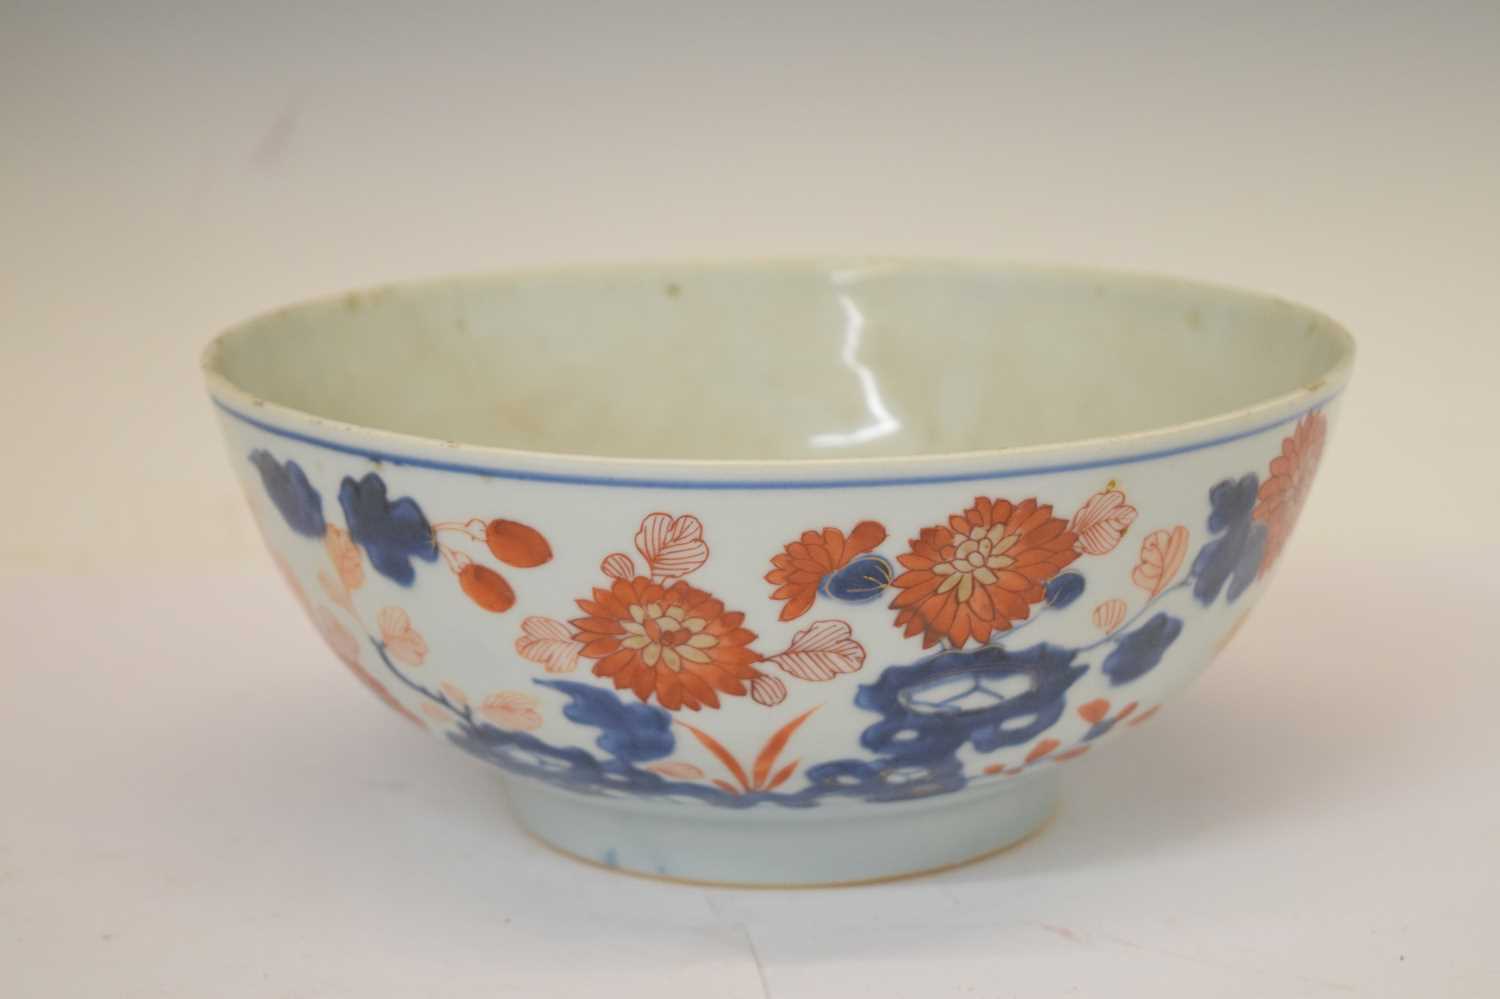 19th century Japanese Imari porcelain bowl - Image 7 of 10